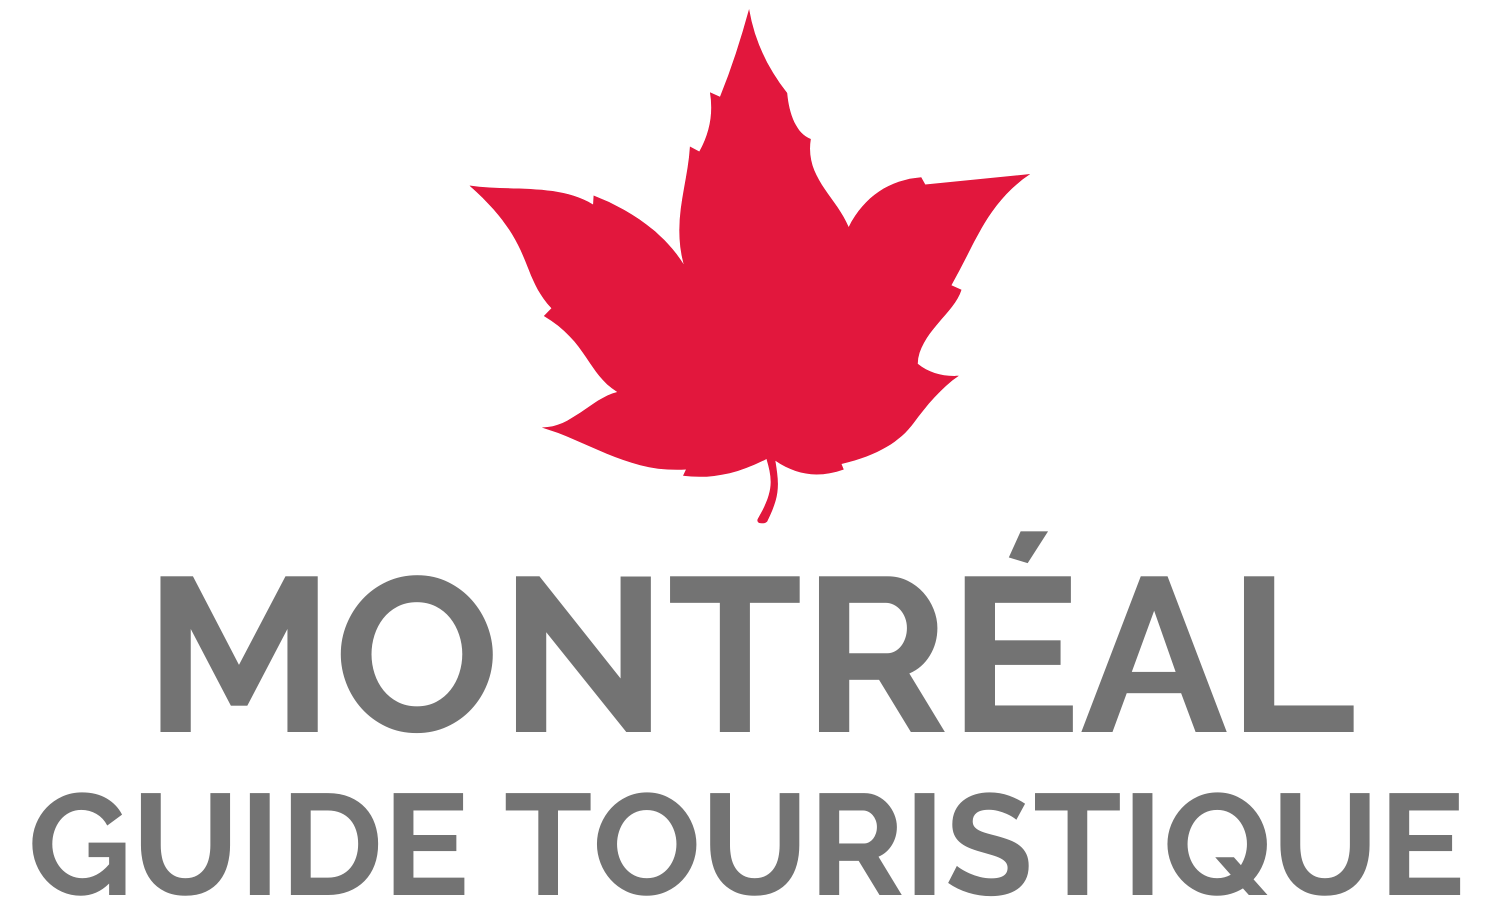 Montreal guidetouristique